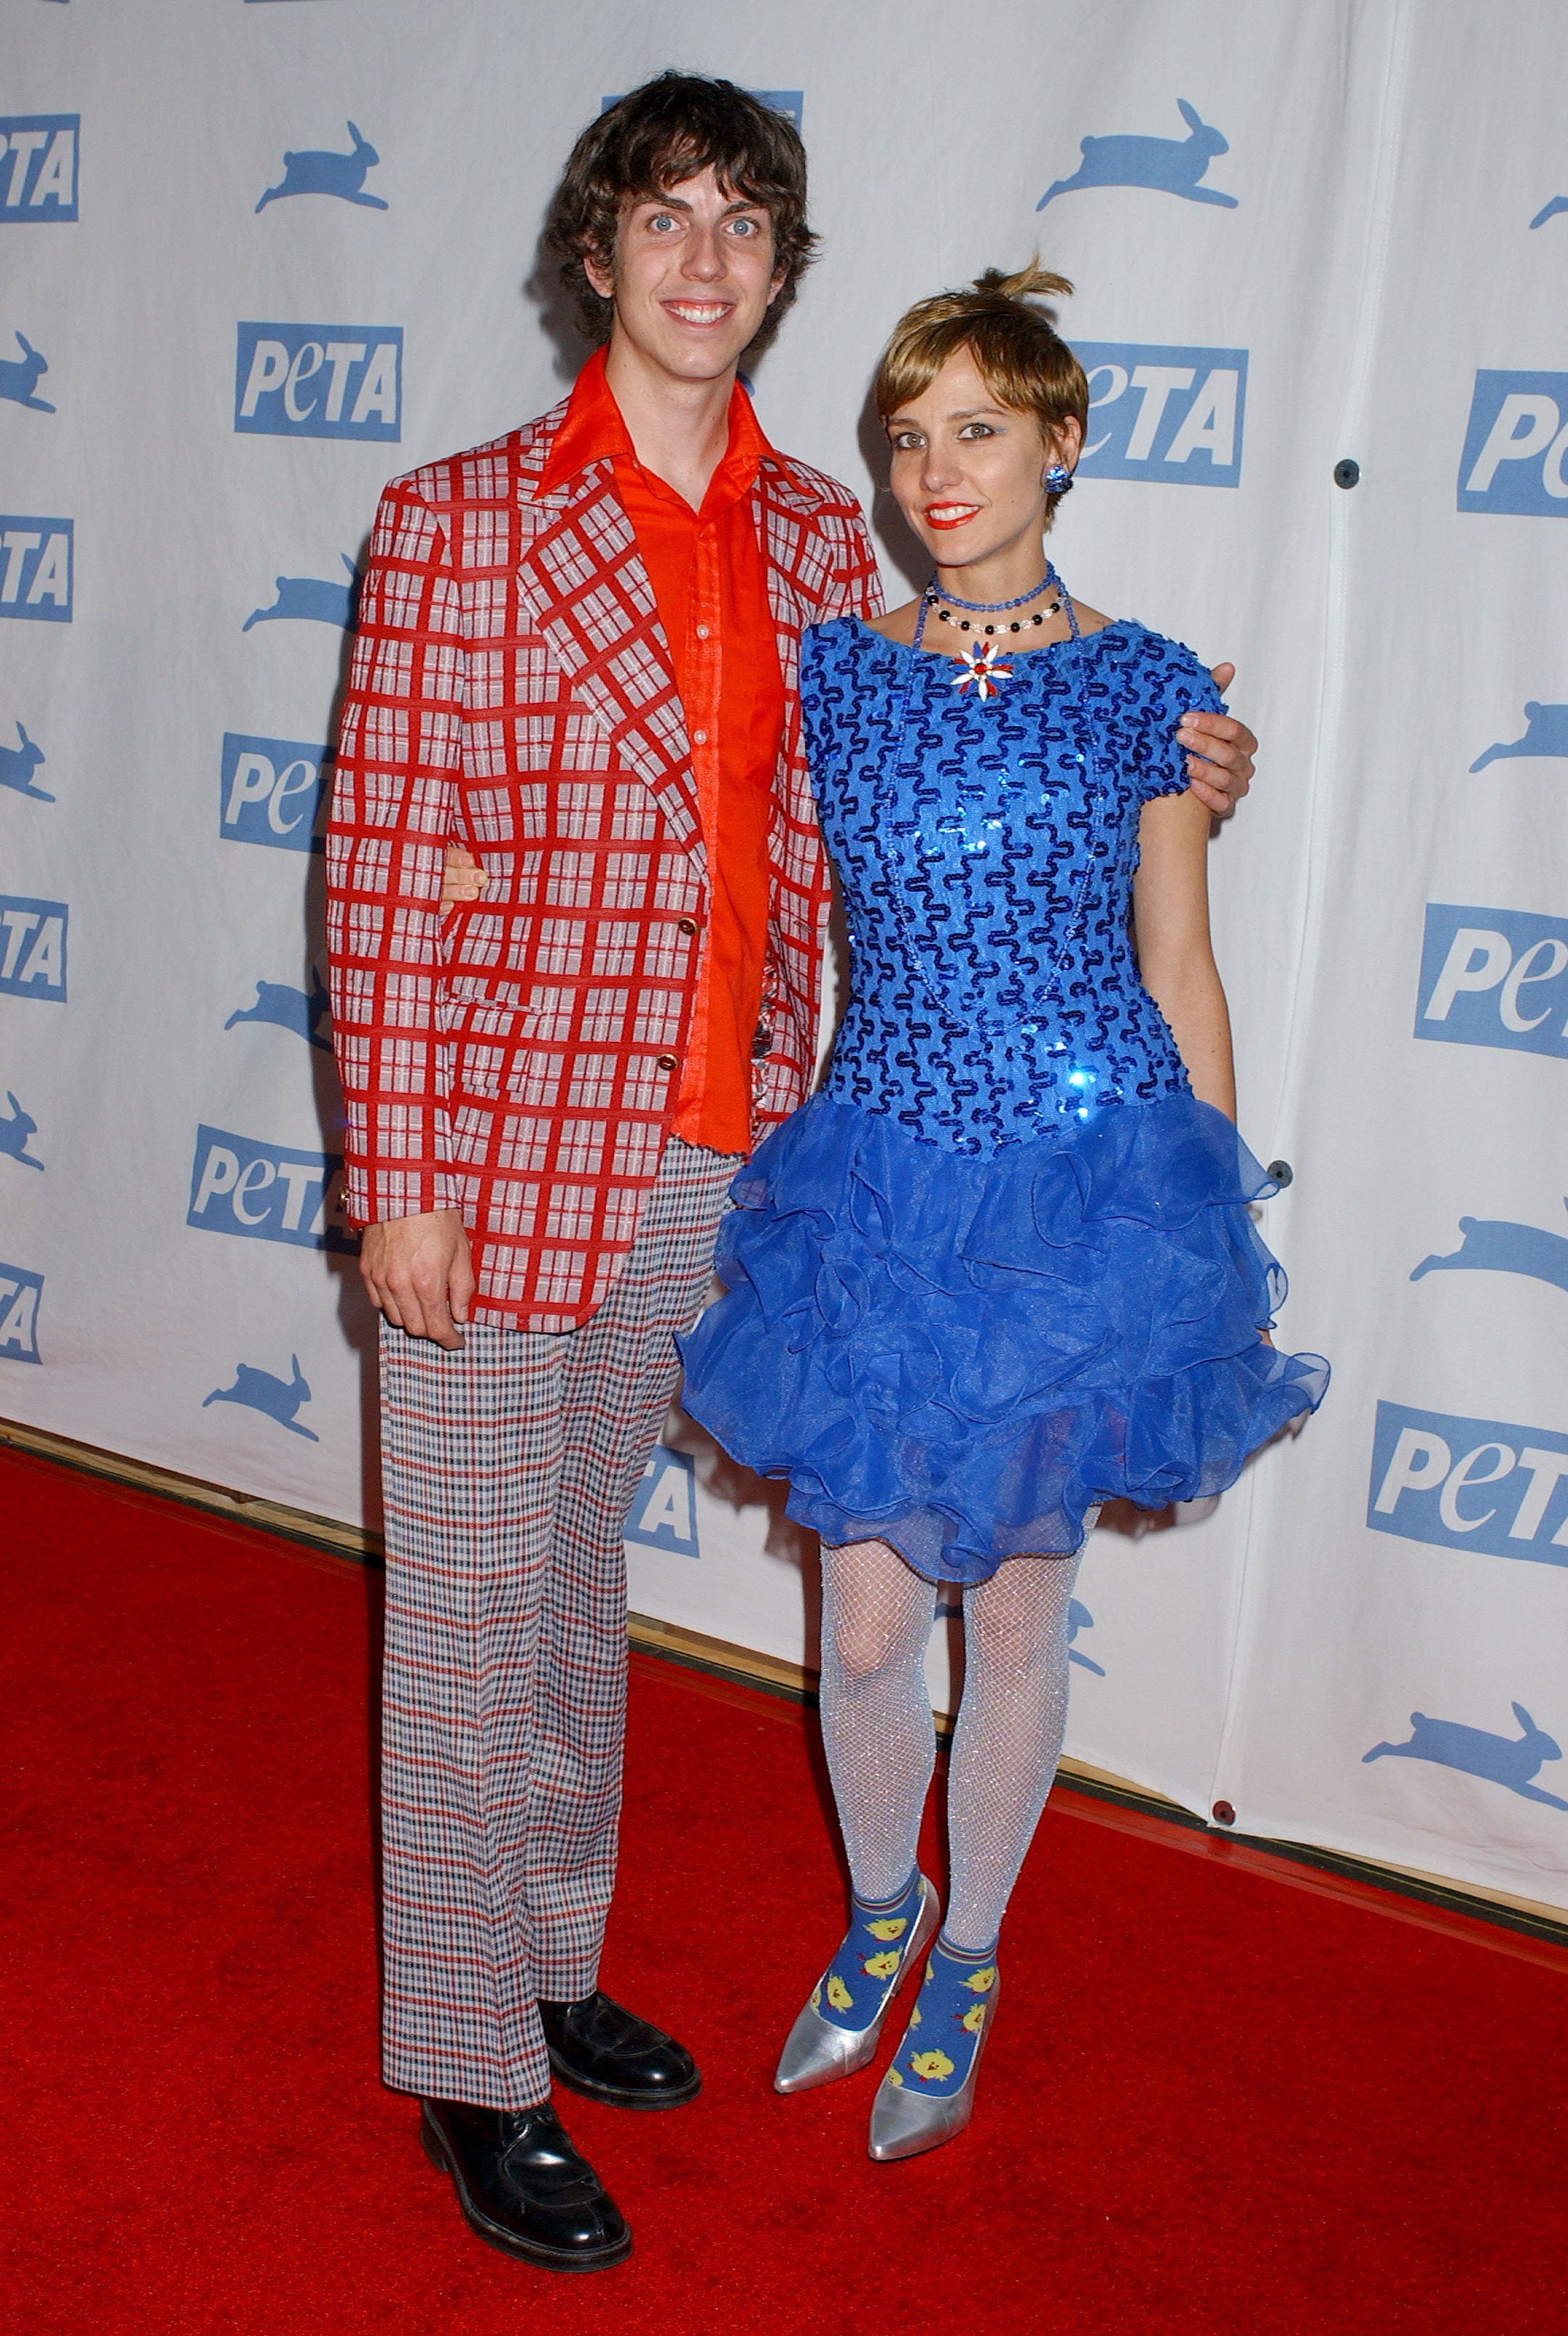 Taran Noah Smith and Heidi Van Pelt attend PETA's 25th Anniversary Gala and Humanitarian Awards Show at Paramount Studios in Hollywood, California, United States. | Source: Getty Images